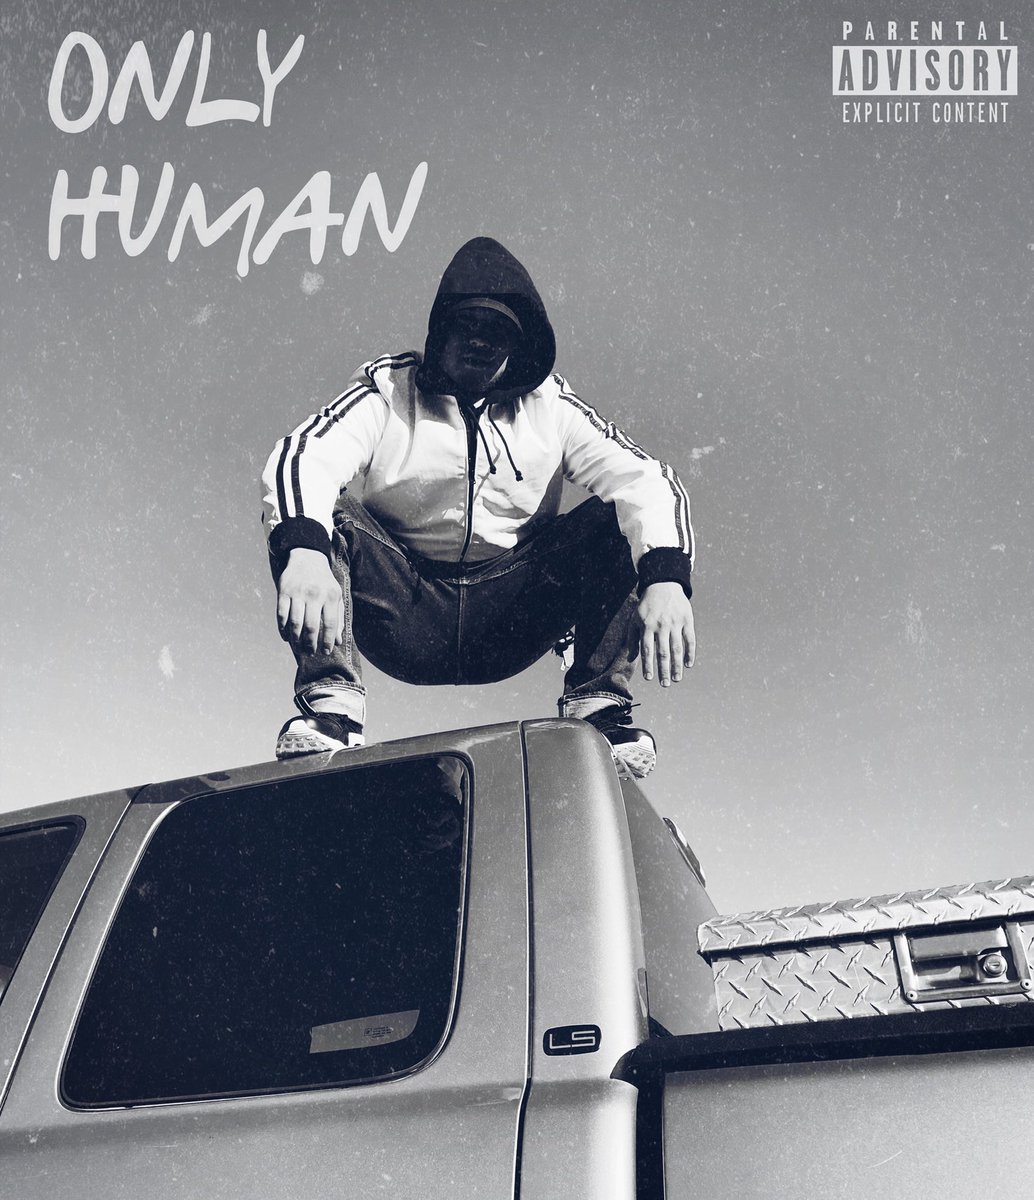 Only Human (Demo) #onlyhuman  NEW SONG. OUT NOW. 💥 LINK IN BIO
.
.
.
#music #rapmusic #single #hiphop #rap #artist #rapstudio #communityuprise #followbackinstantly #rapgame #artist #qdeycinc